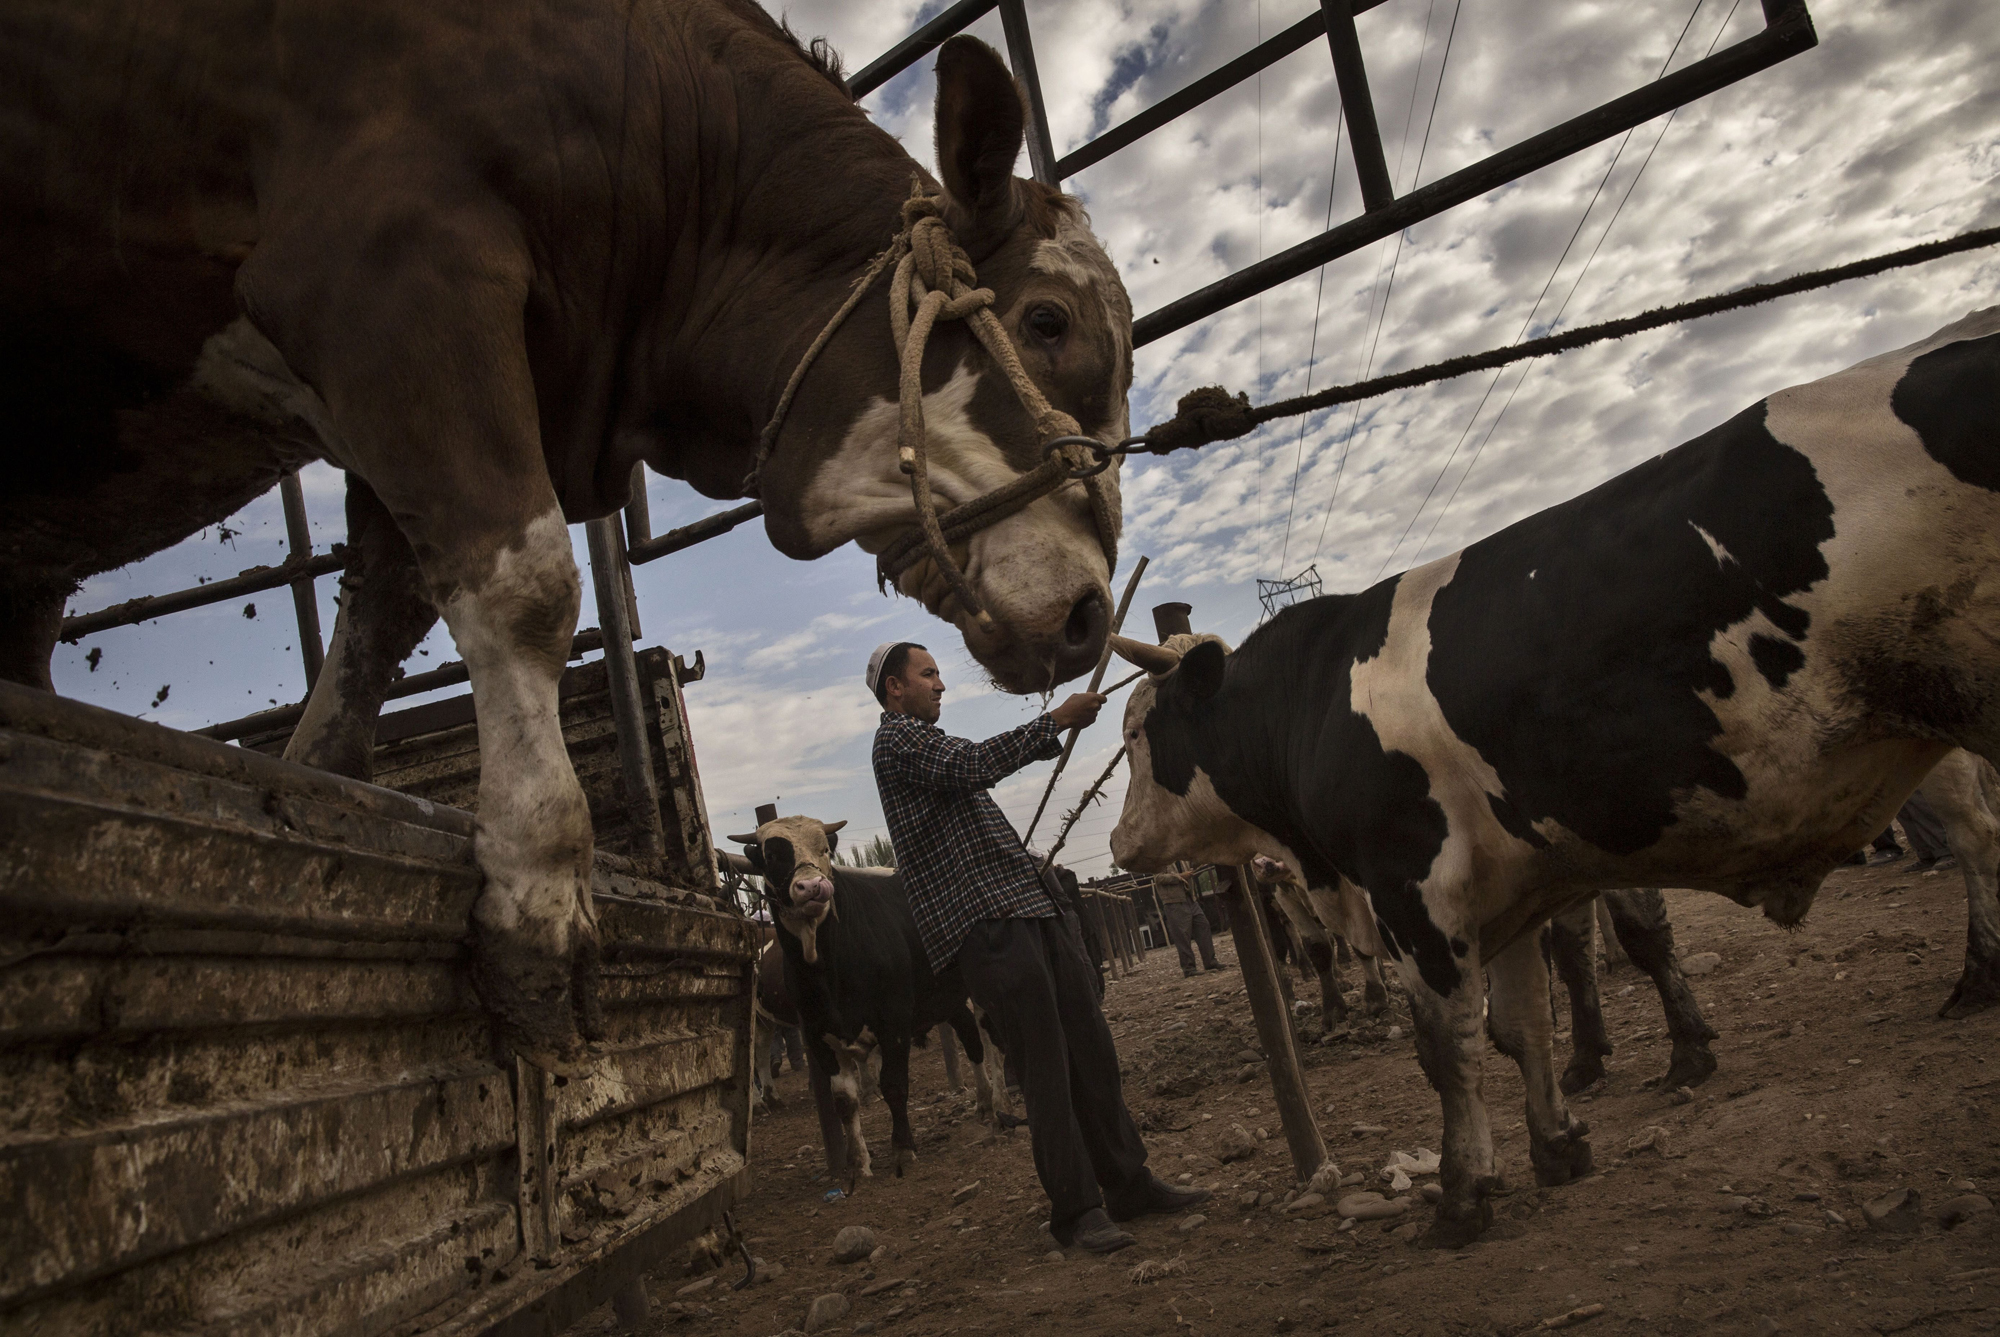 A Uighur farmer unloads cattle from a truck at a livestock market on August 3, 2014 in Kashgar.